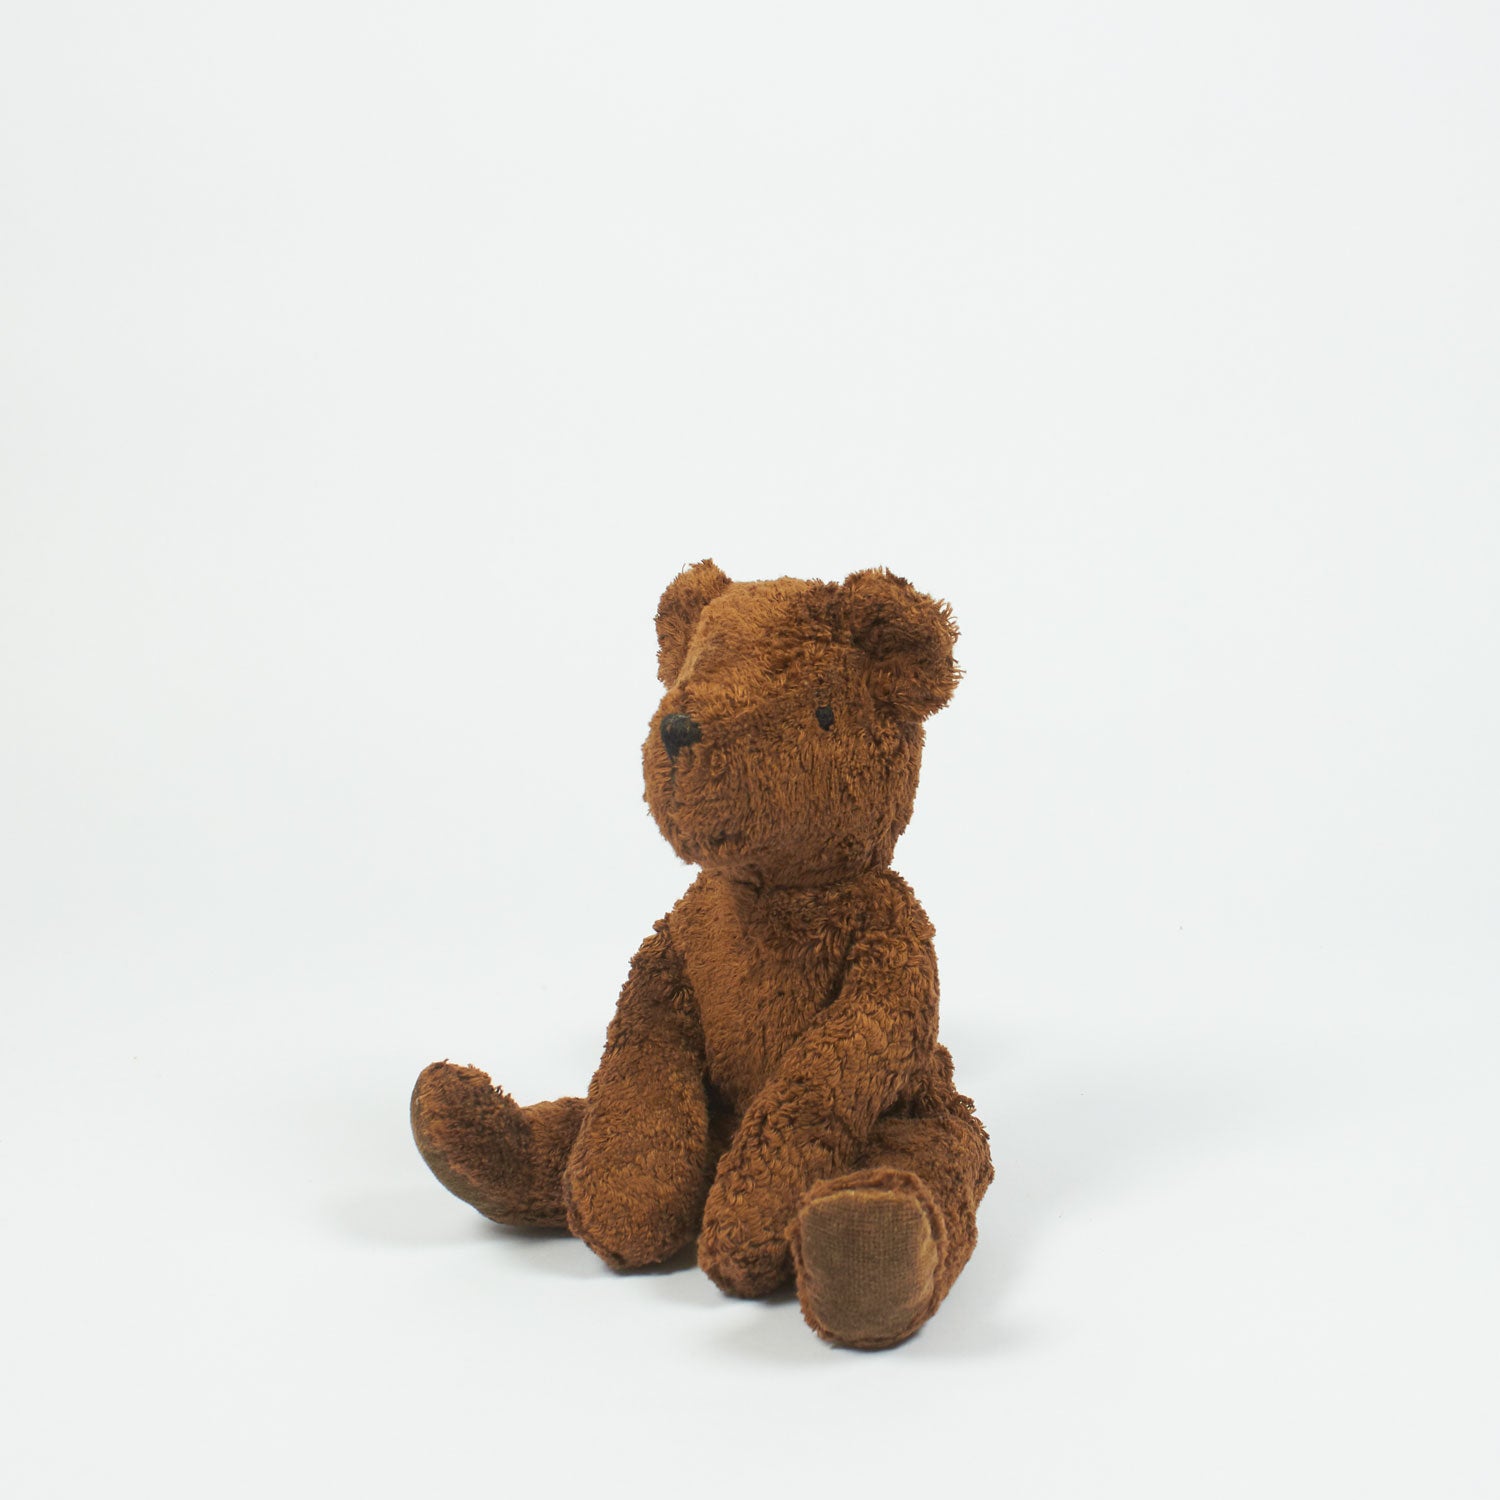 Senger Naturwelt Floppy-Animals bear in brown, small